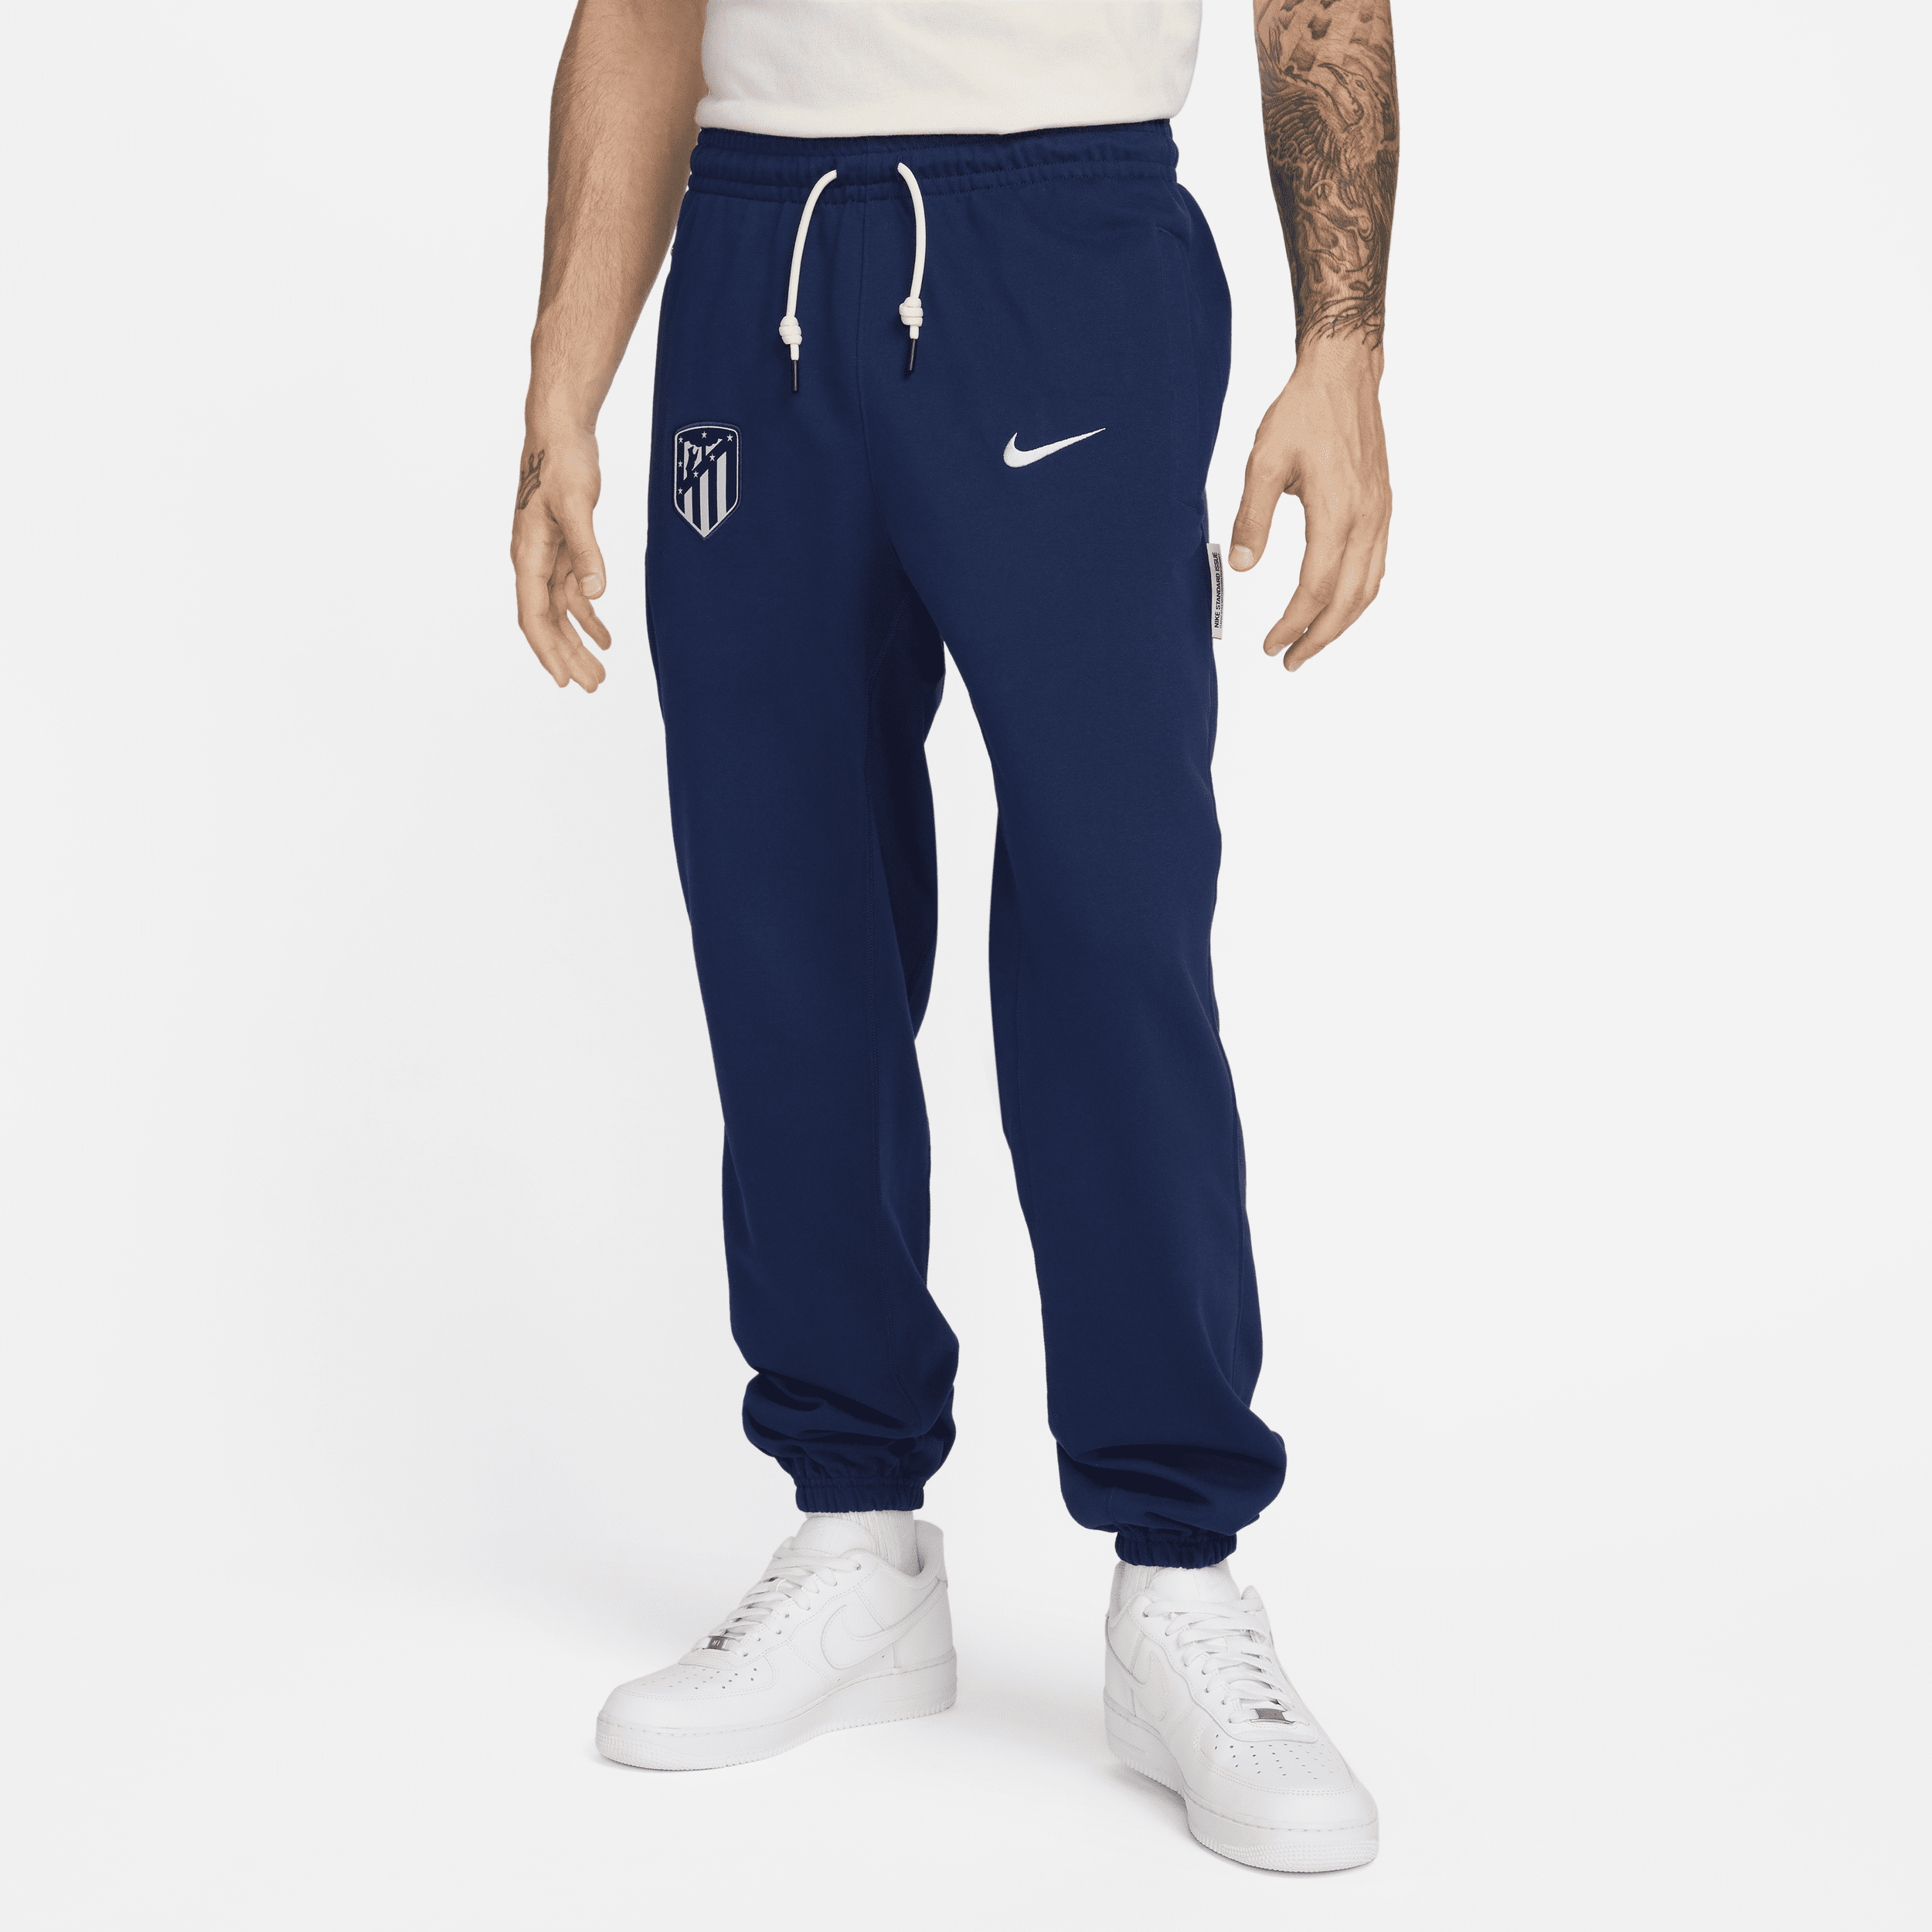 Pantaloni da calcio Nike Atlético de Madrid Standard Issue – Uomo - Blu